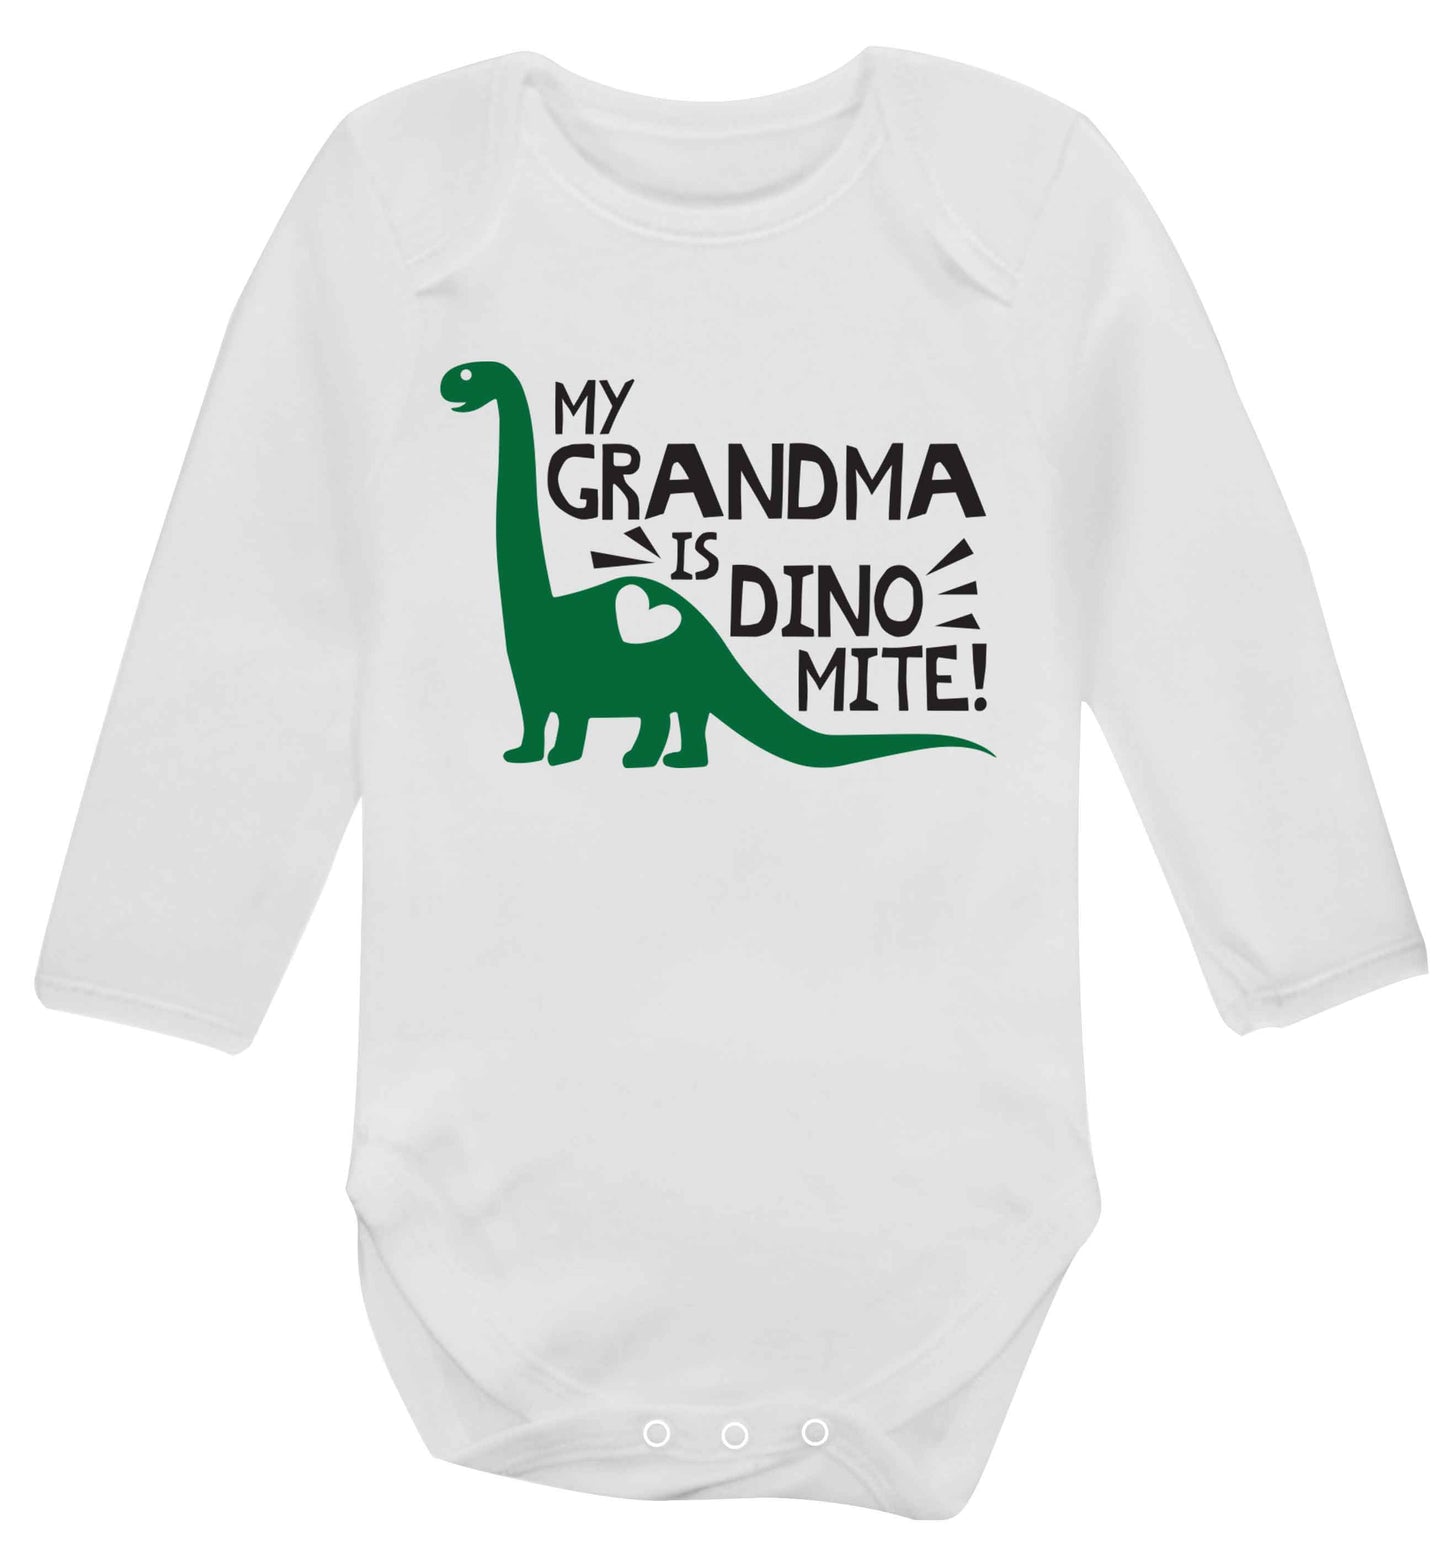 My grandma is dinomite! Baby Vest long sleeved white 6-12 months